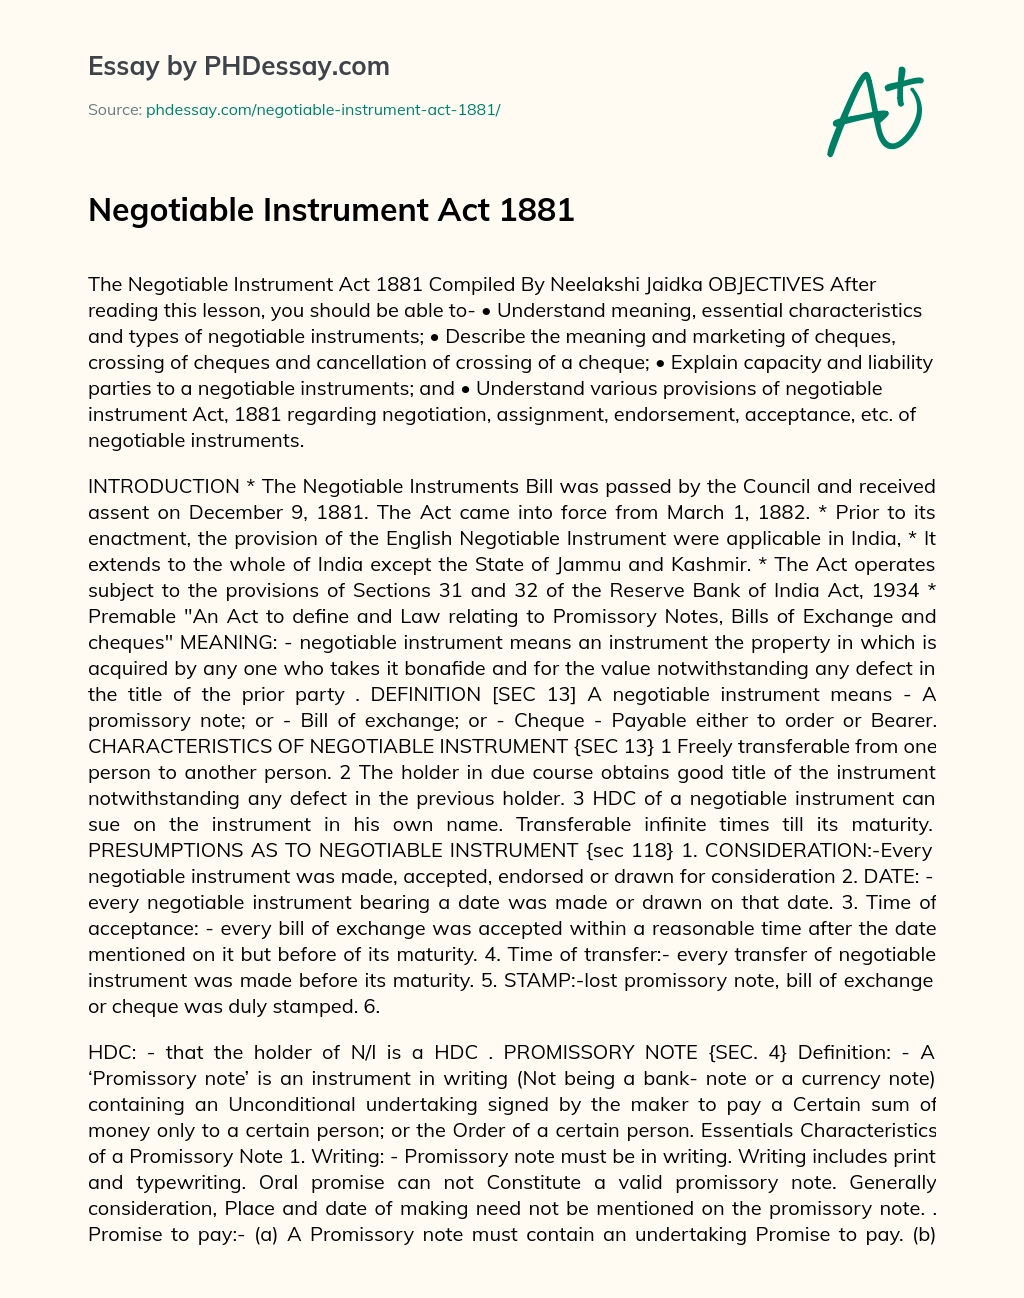 Negotiable Instrument Act 1881 essay